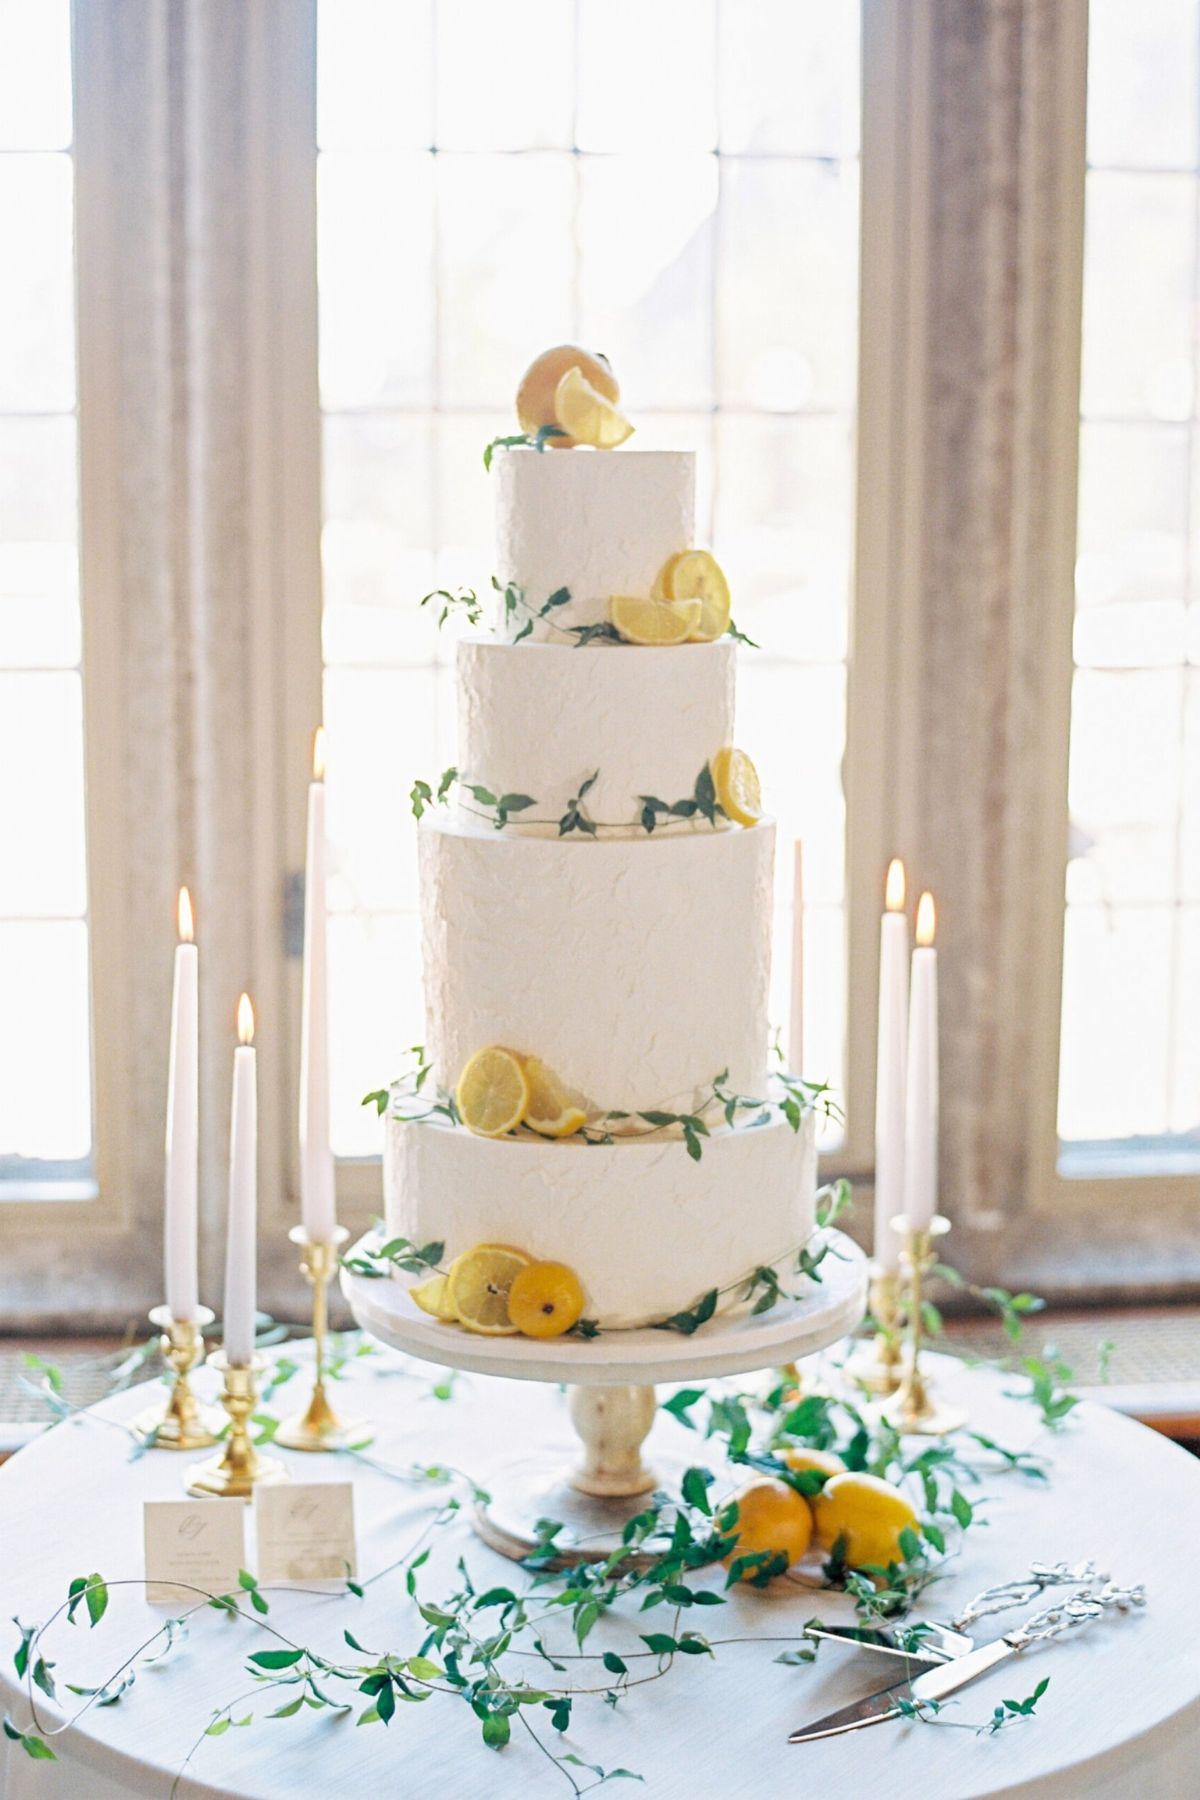 Best Wedding Cake Flavors - lemon